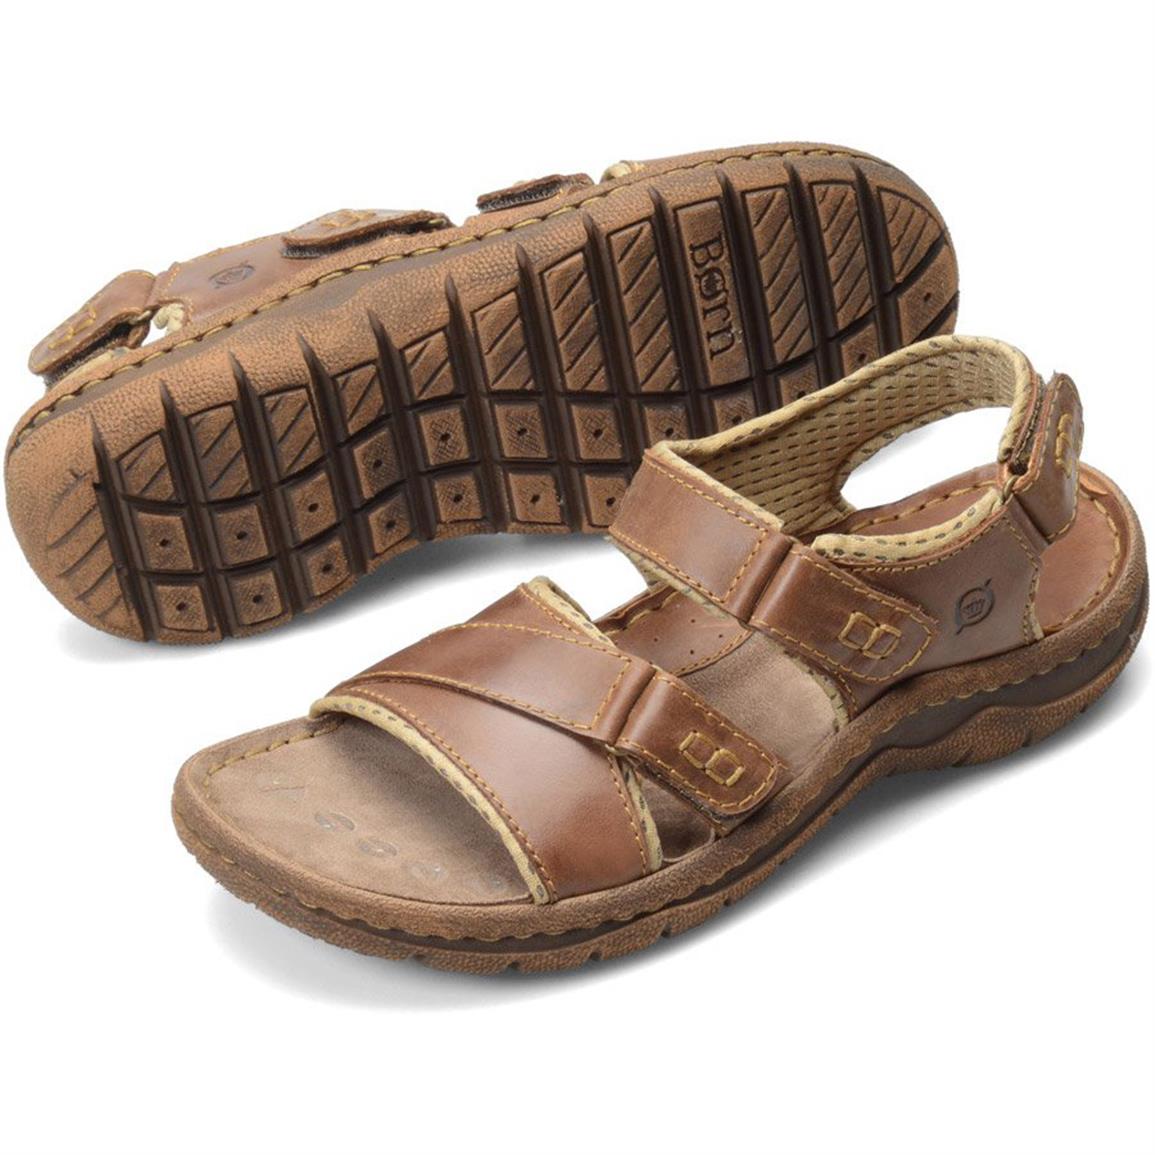 Born Tyrell River Sandals - 652990, Sandals & Flip Flops at Sportsman's ...